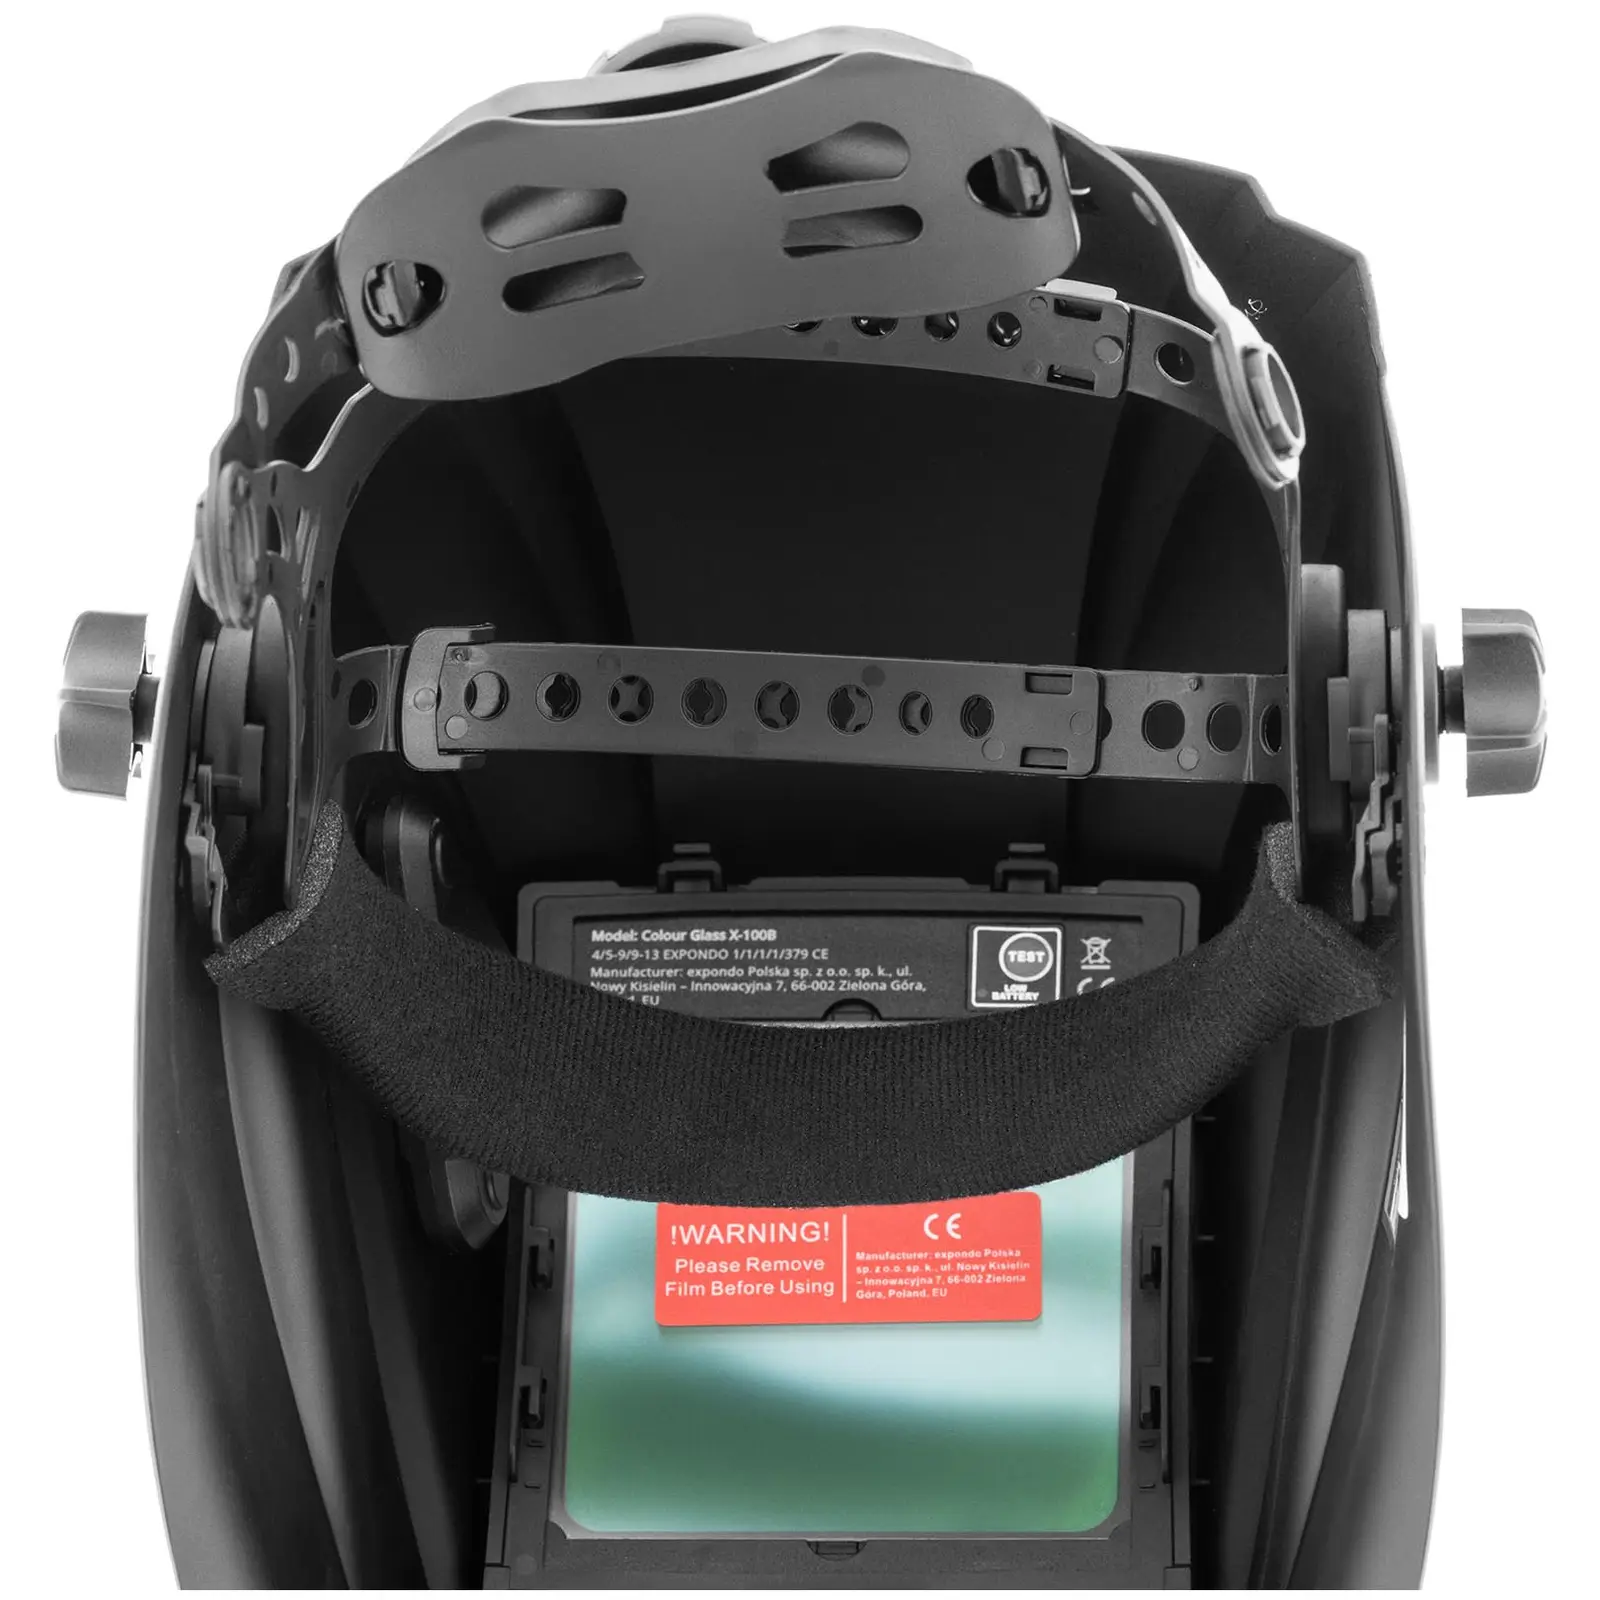 Welding Helmet - COLOUR GLASS X-100B - coloured field of vision